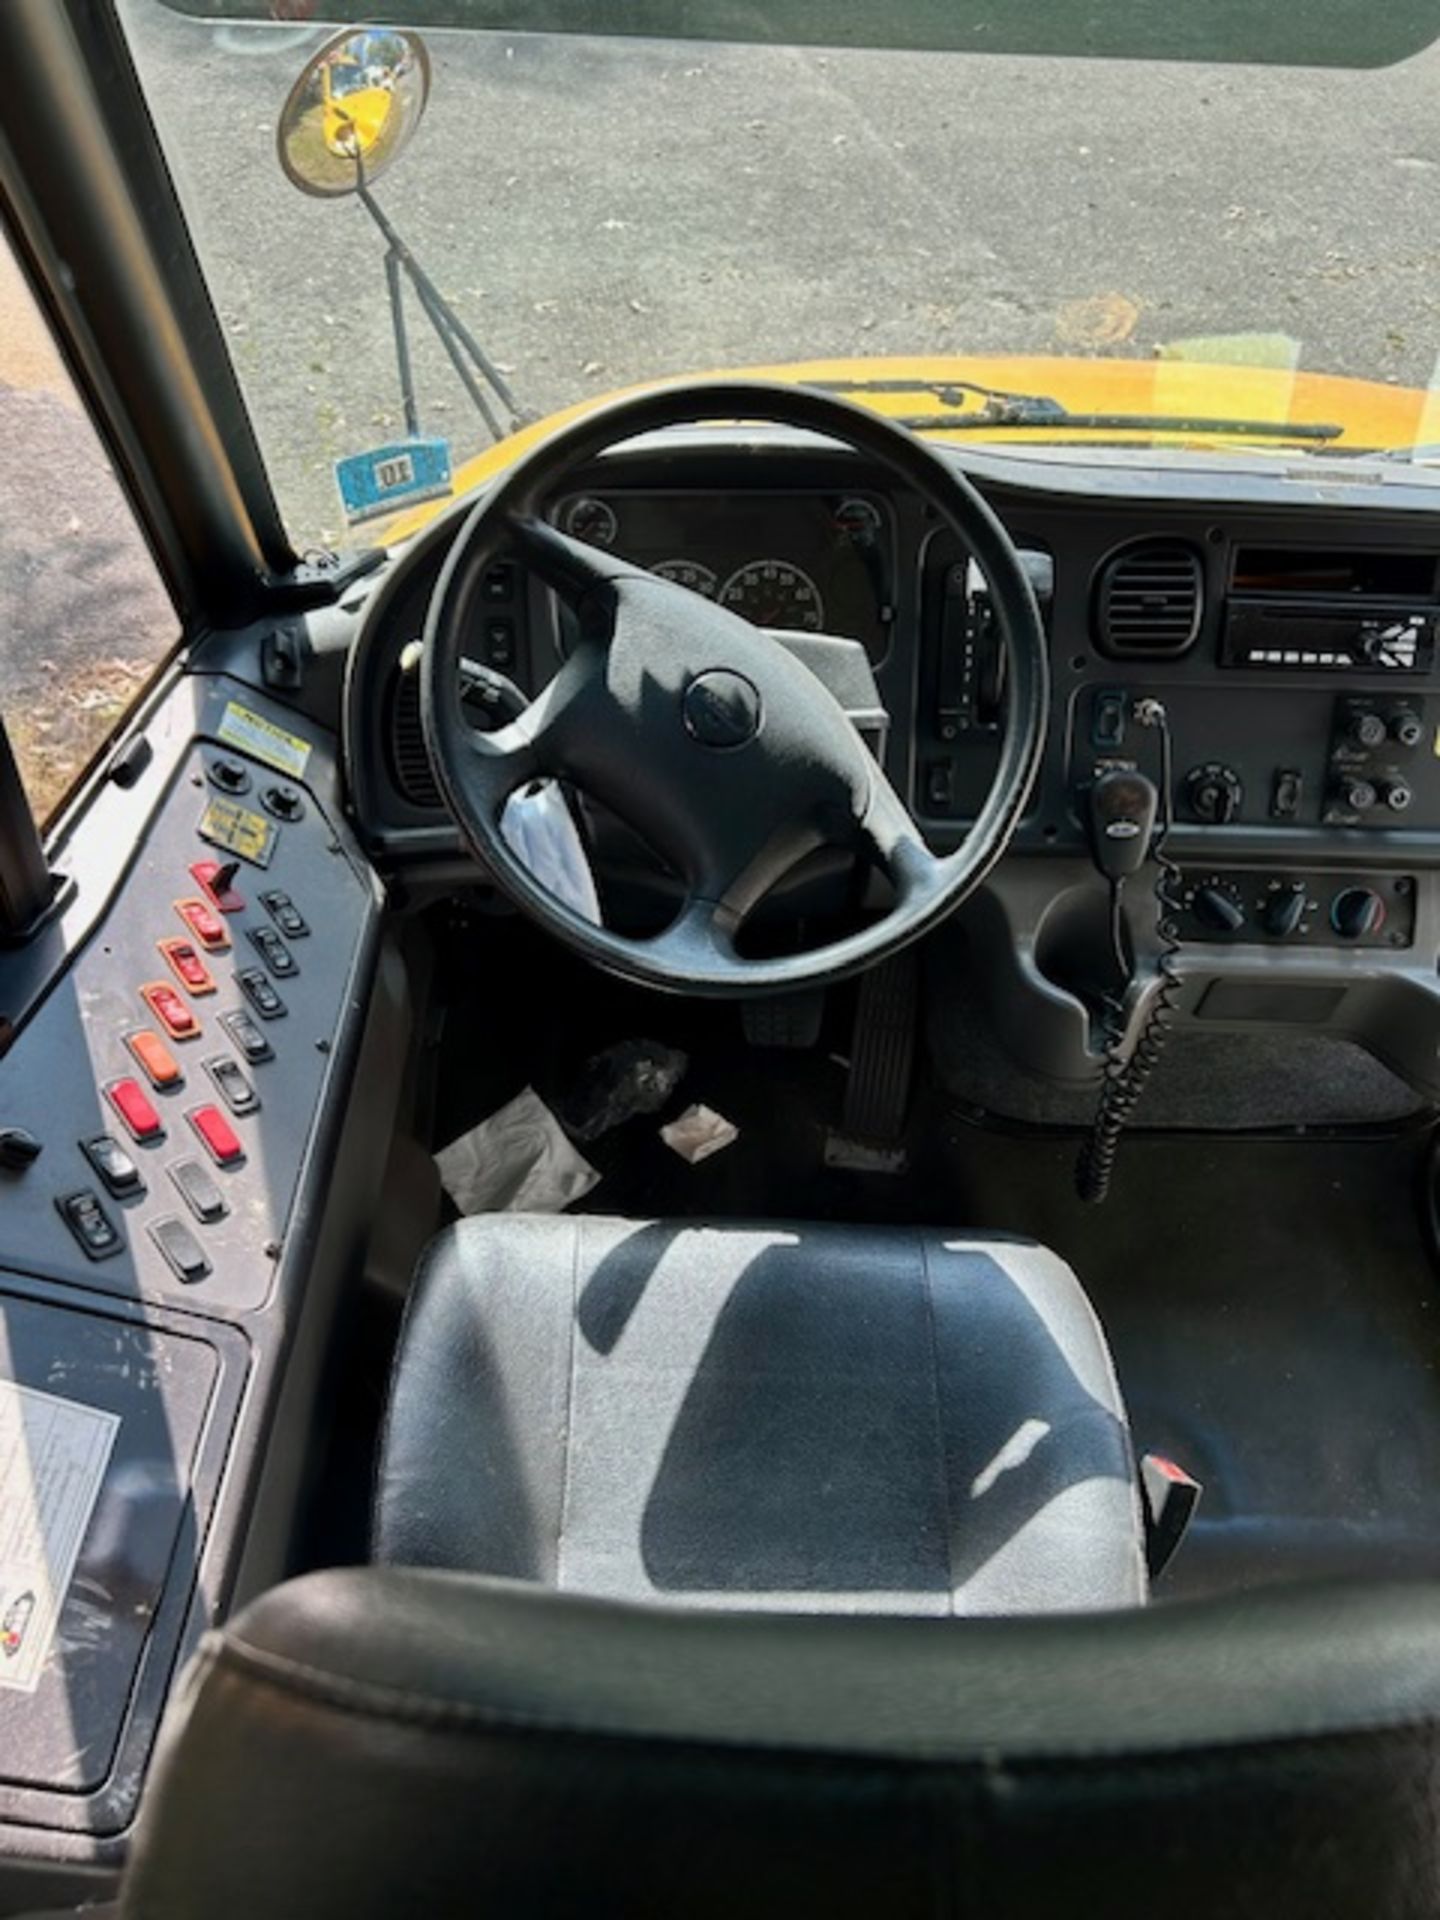 2018 Thomas 54 Seat School Bus - Image 8 of 15